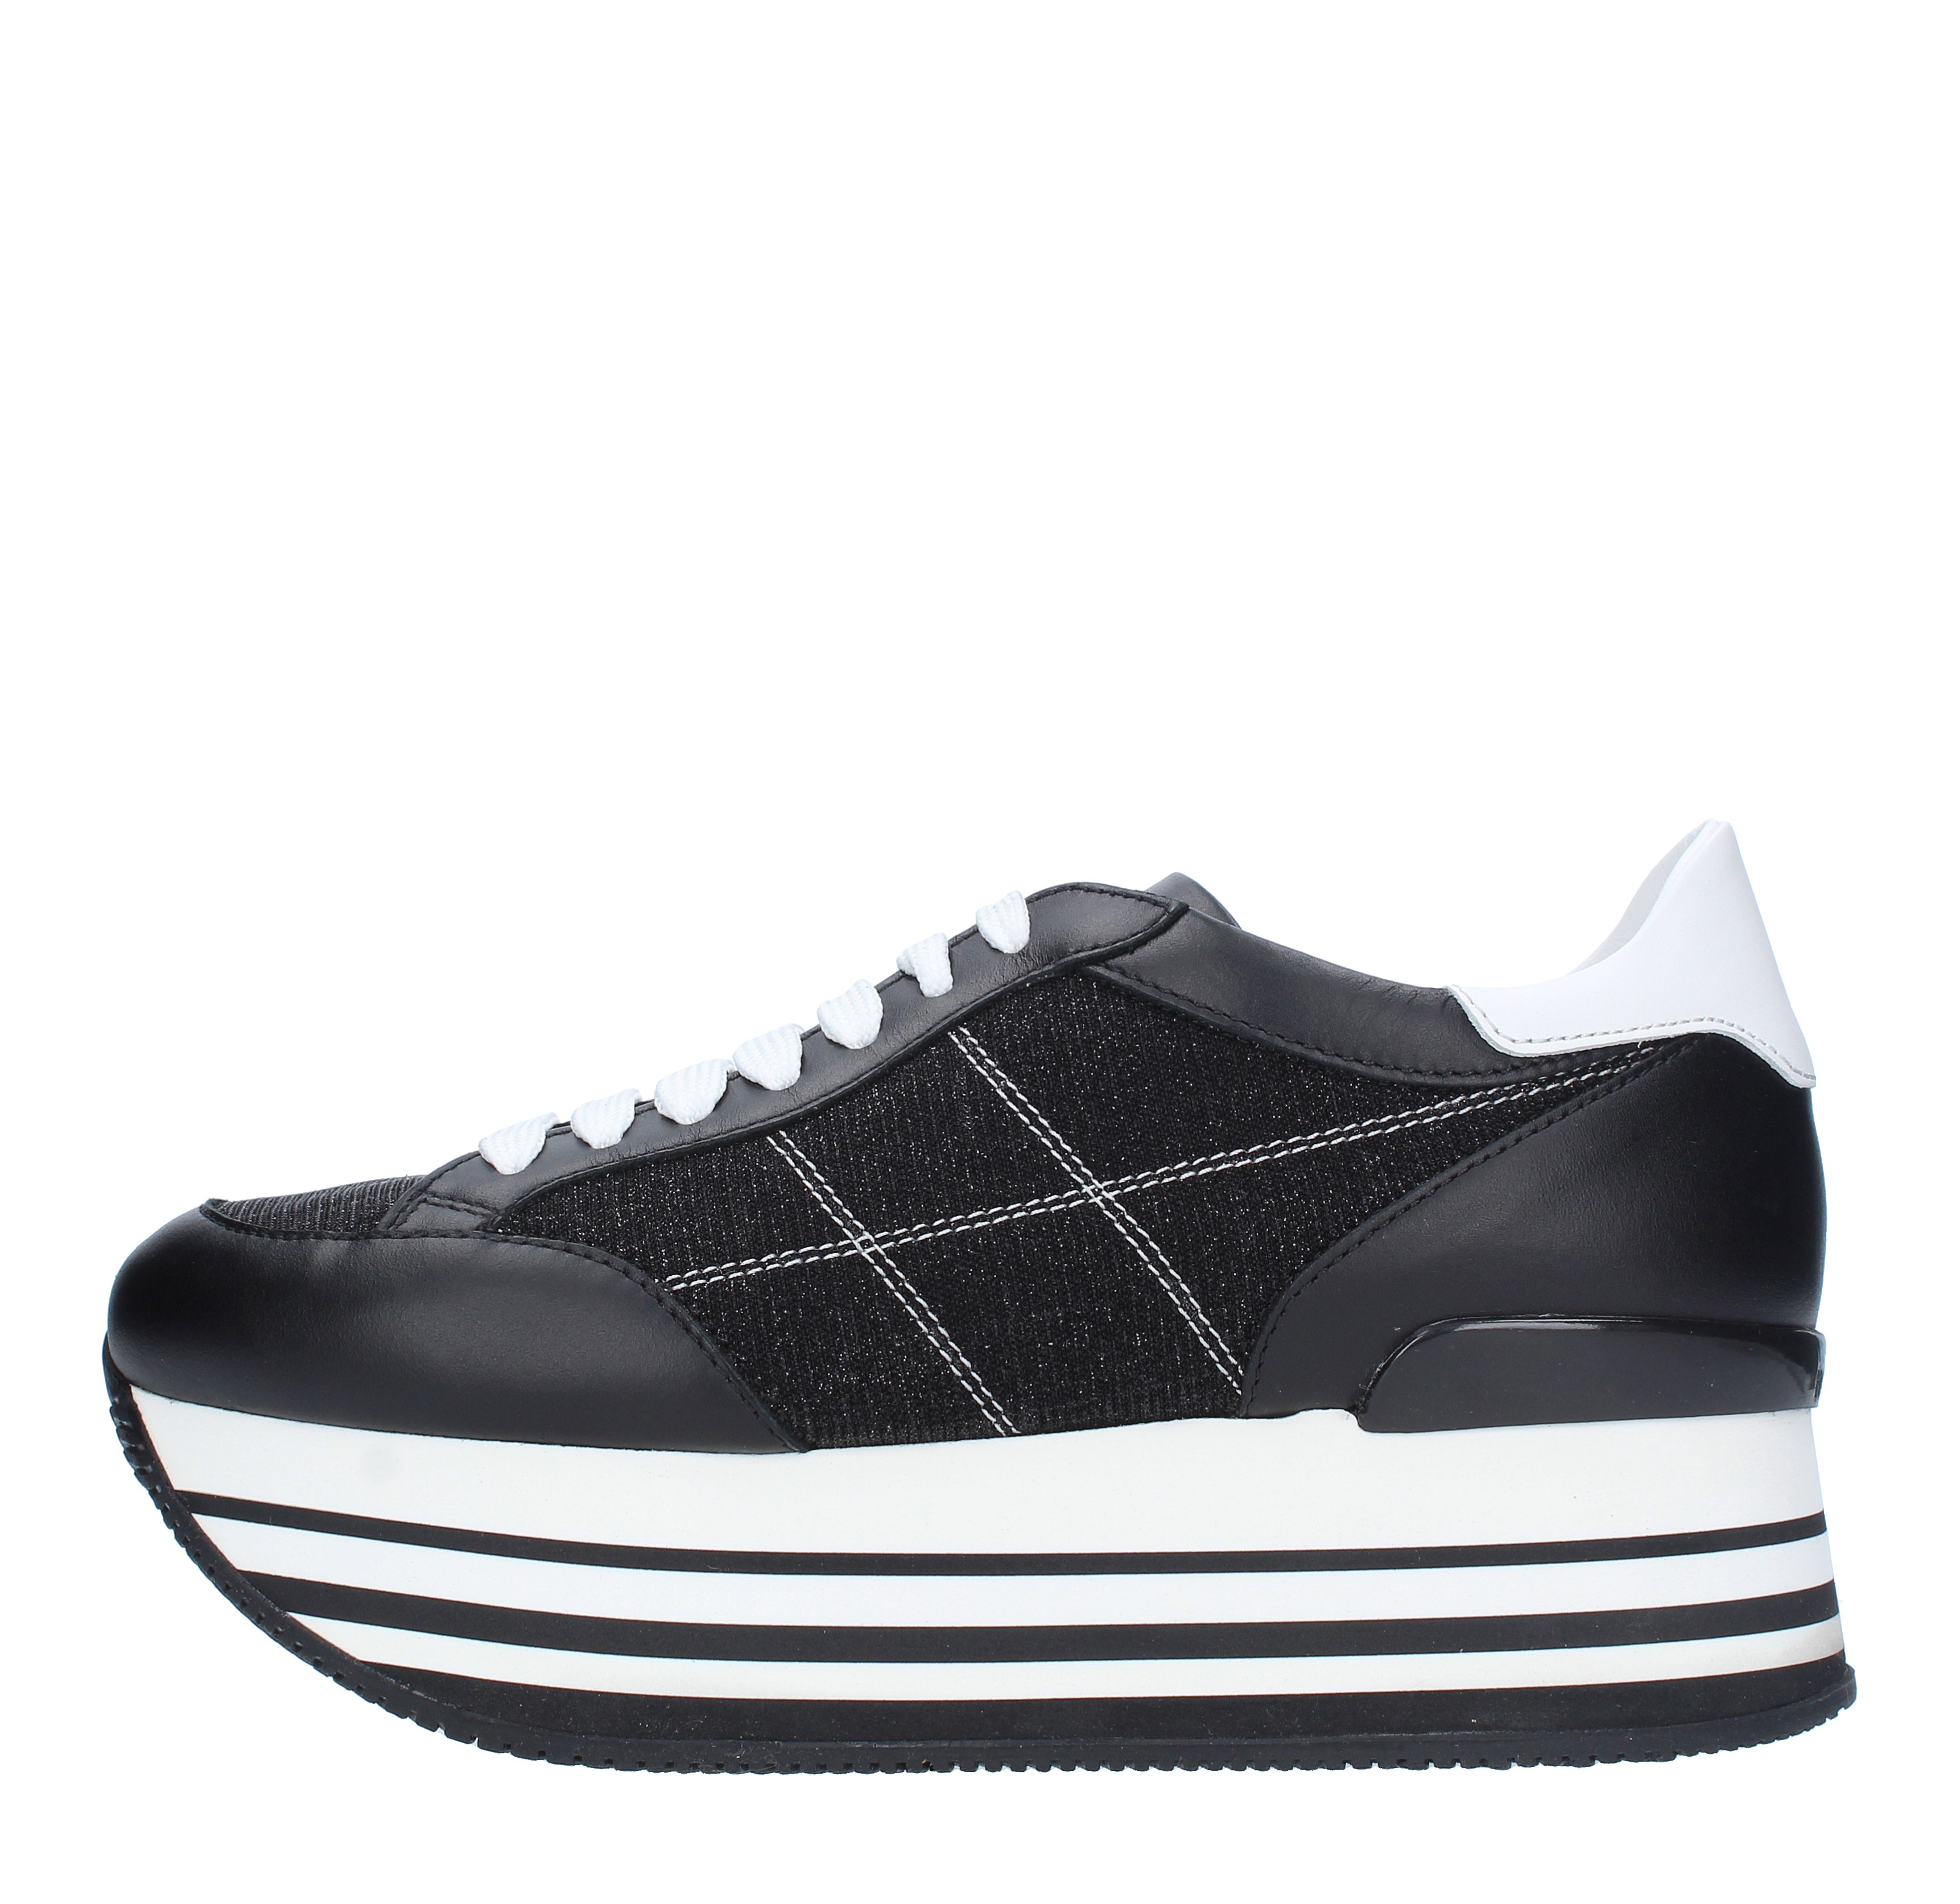 Sneakers Maxi222H in pelle e tessuto - HOGAN - Ginevra calzature